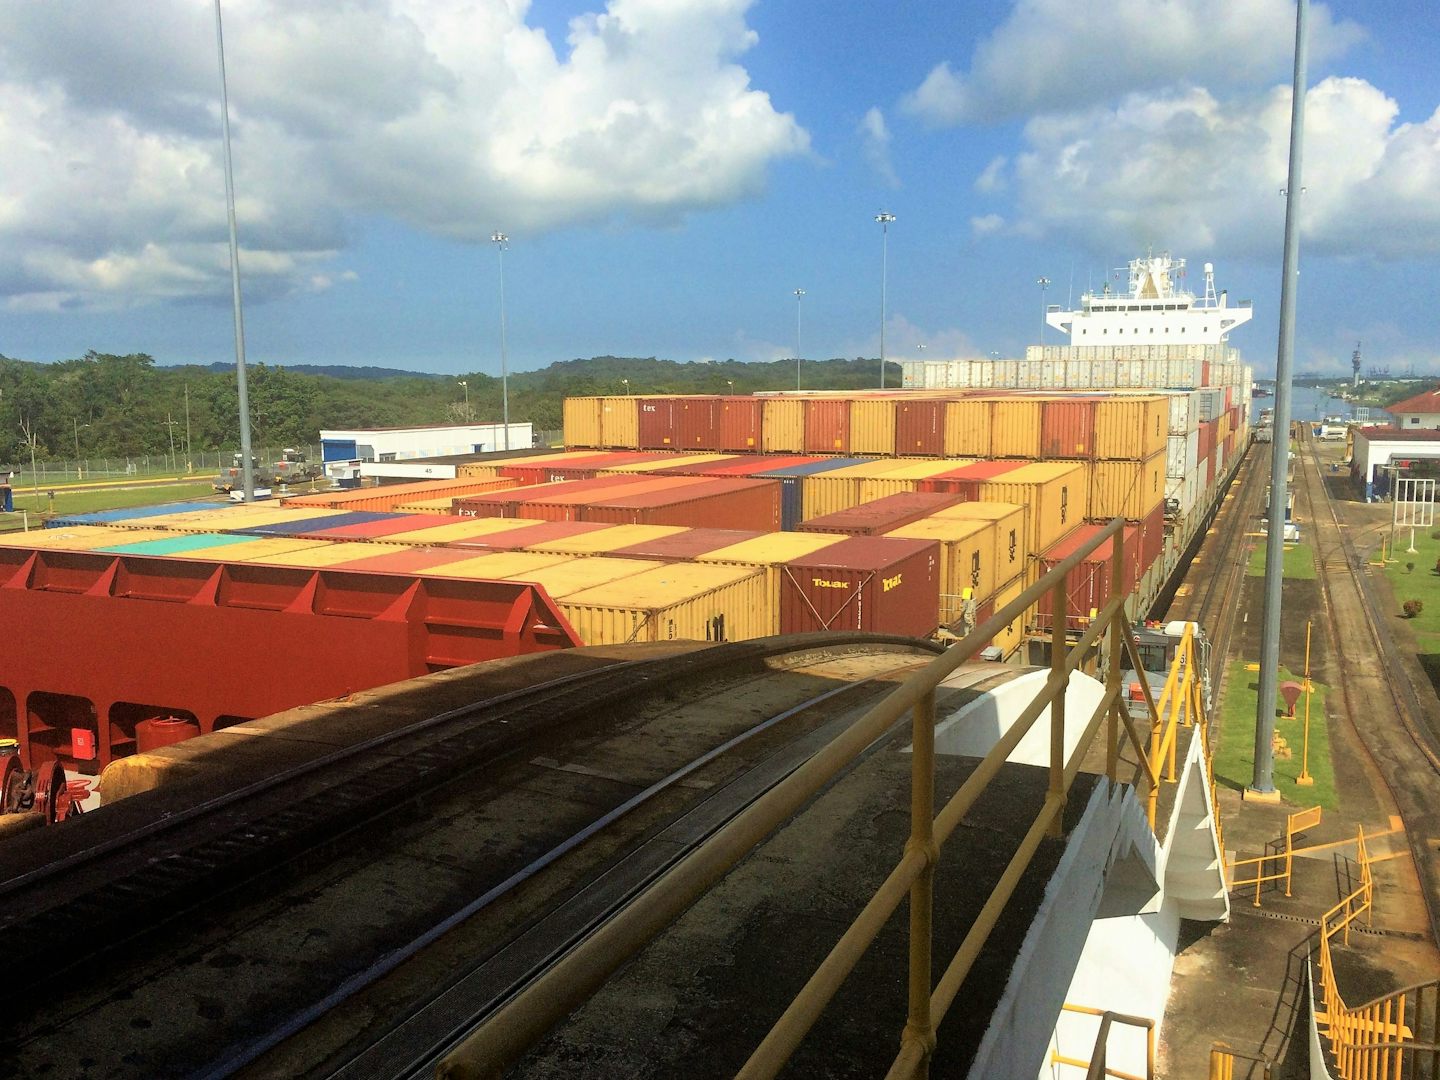 Cargo ship going through the Panama Canal as seen from the Gatun Locks.